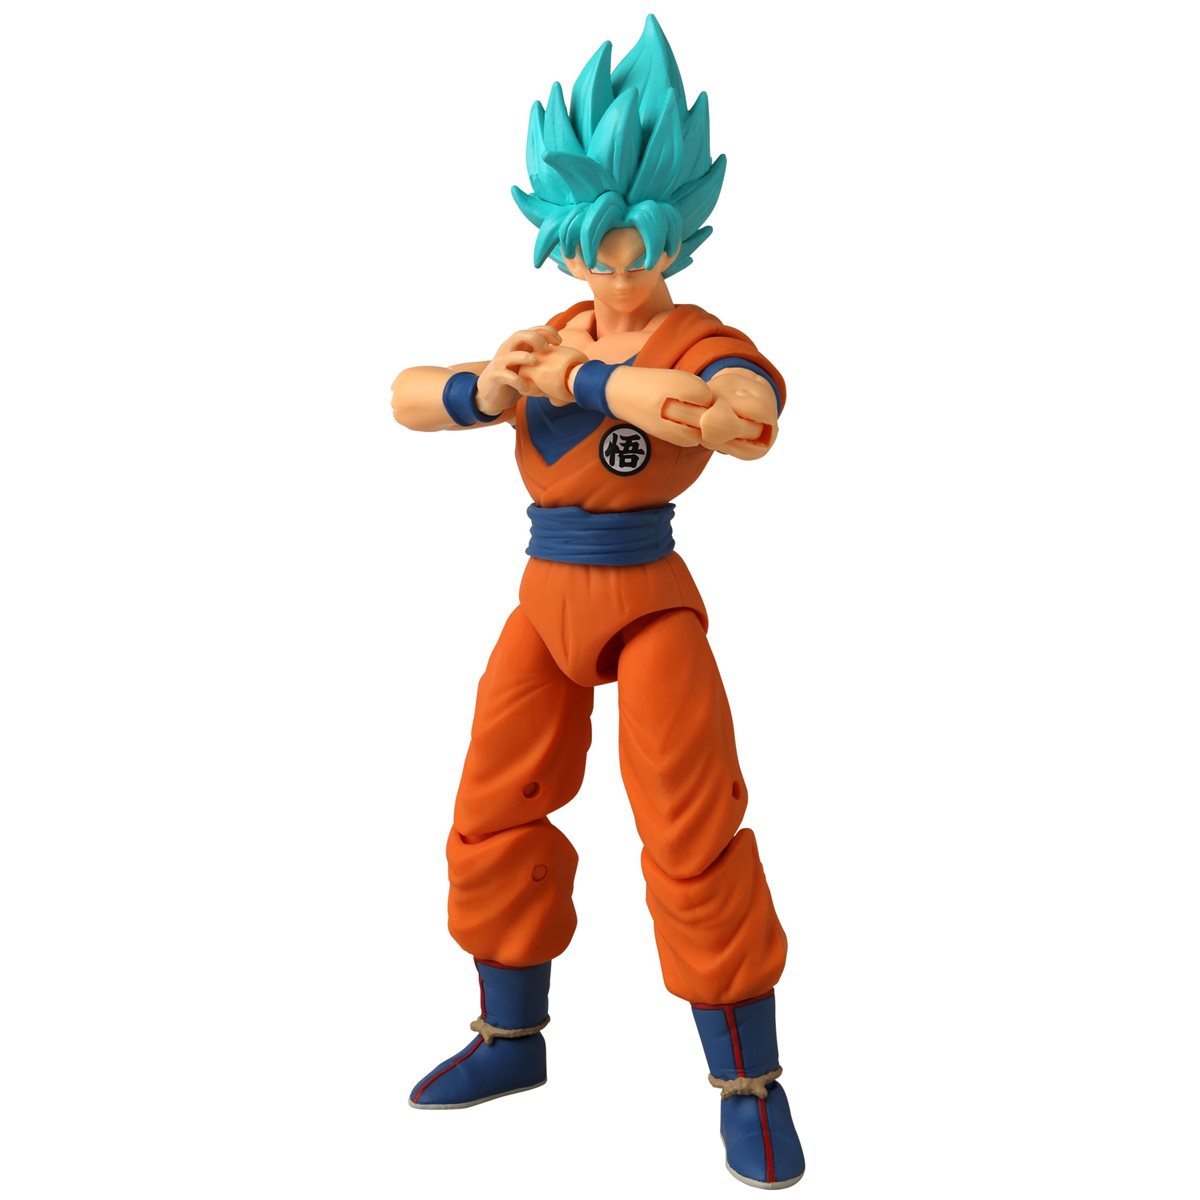 Bandai Goku Dragon Ball Super Star Action Figure for sale online